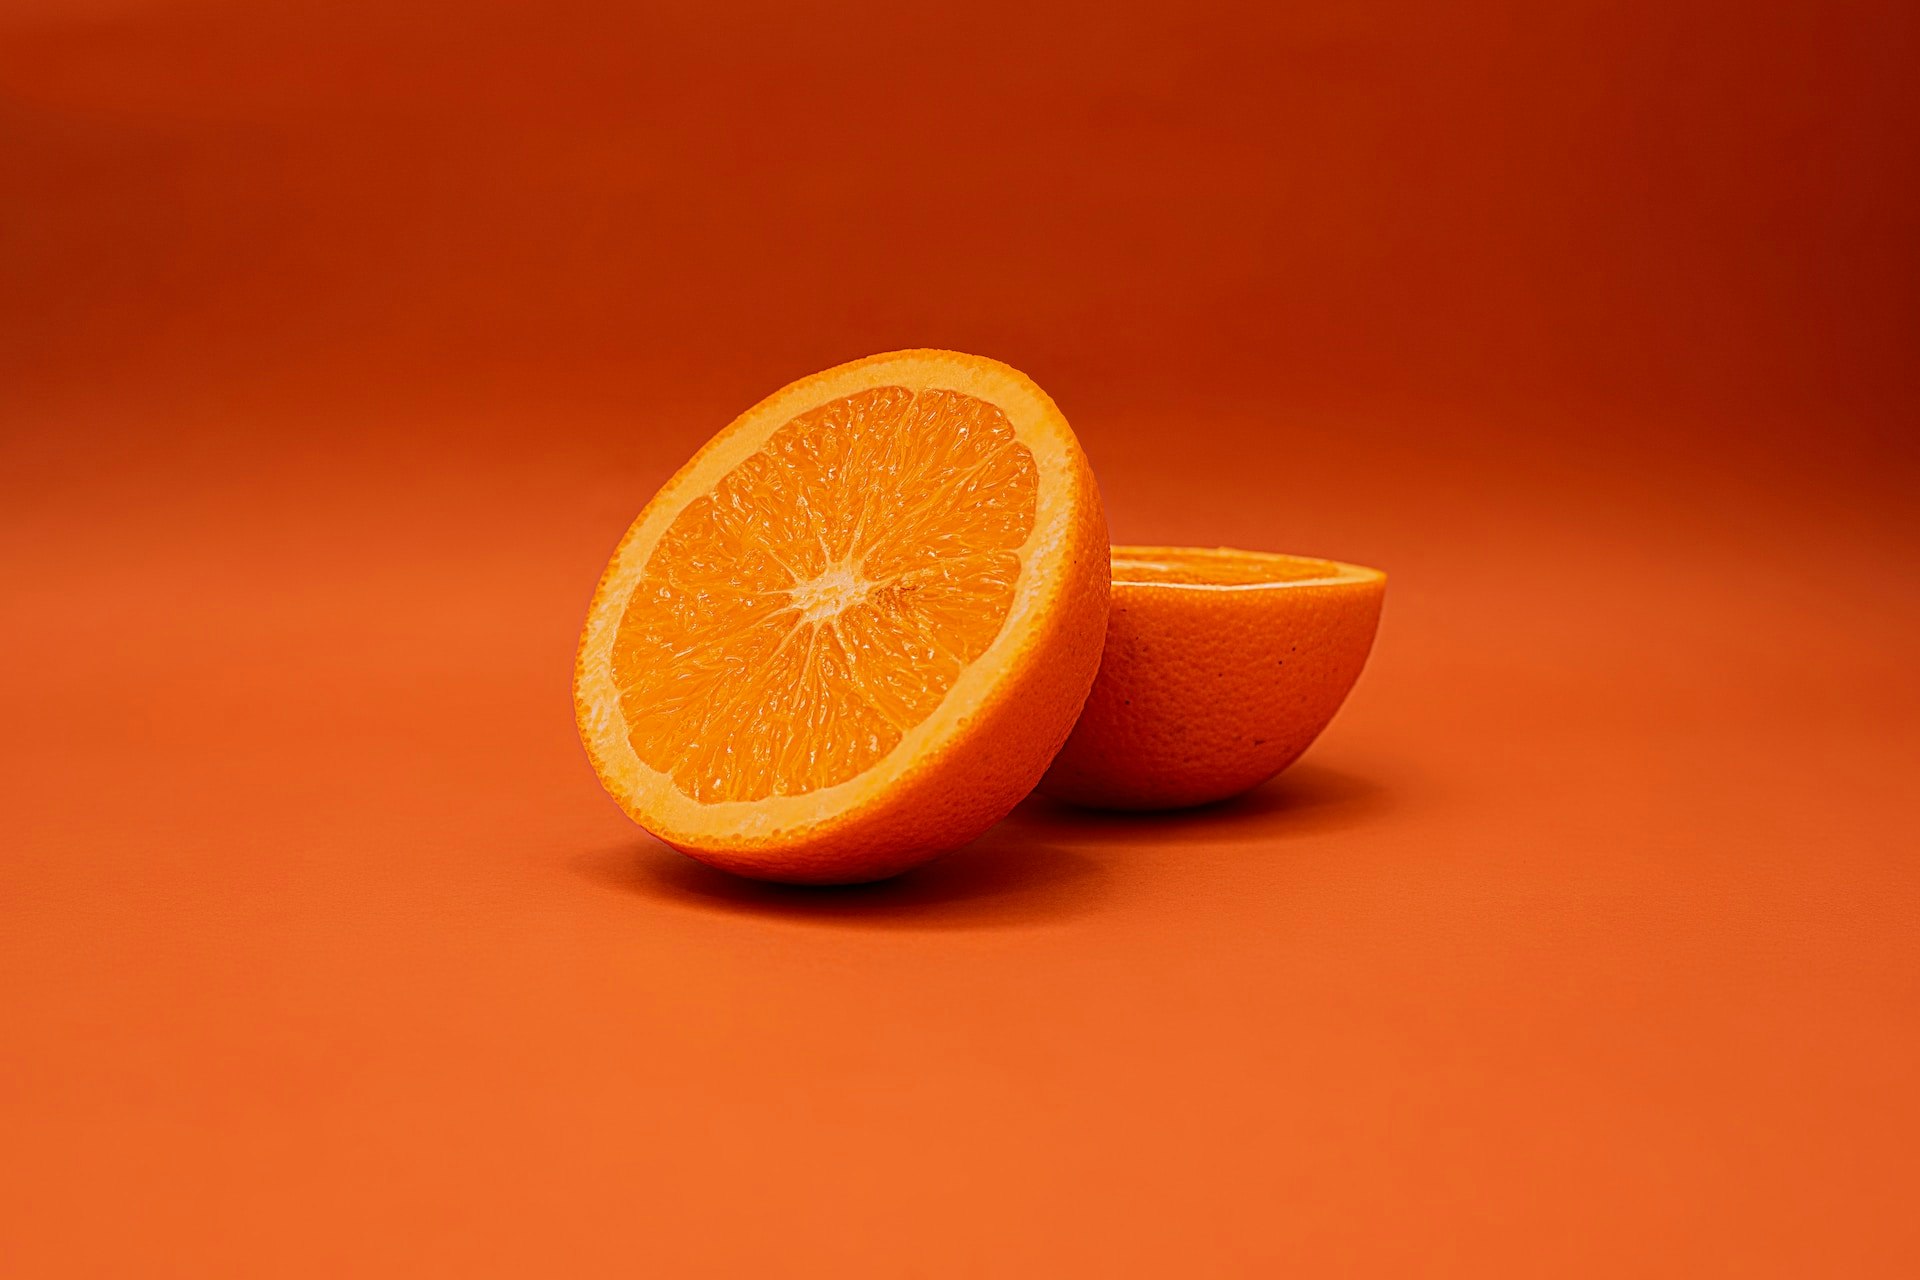 Does Orange Juice Have Vitamin C?